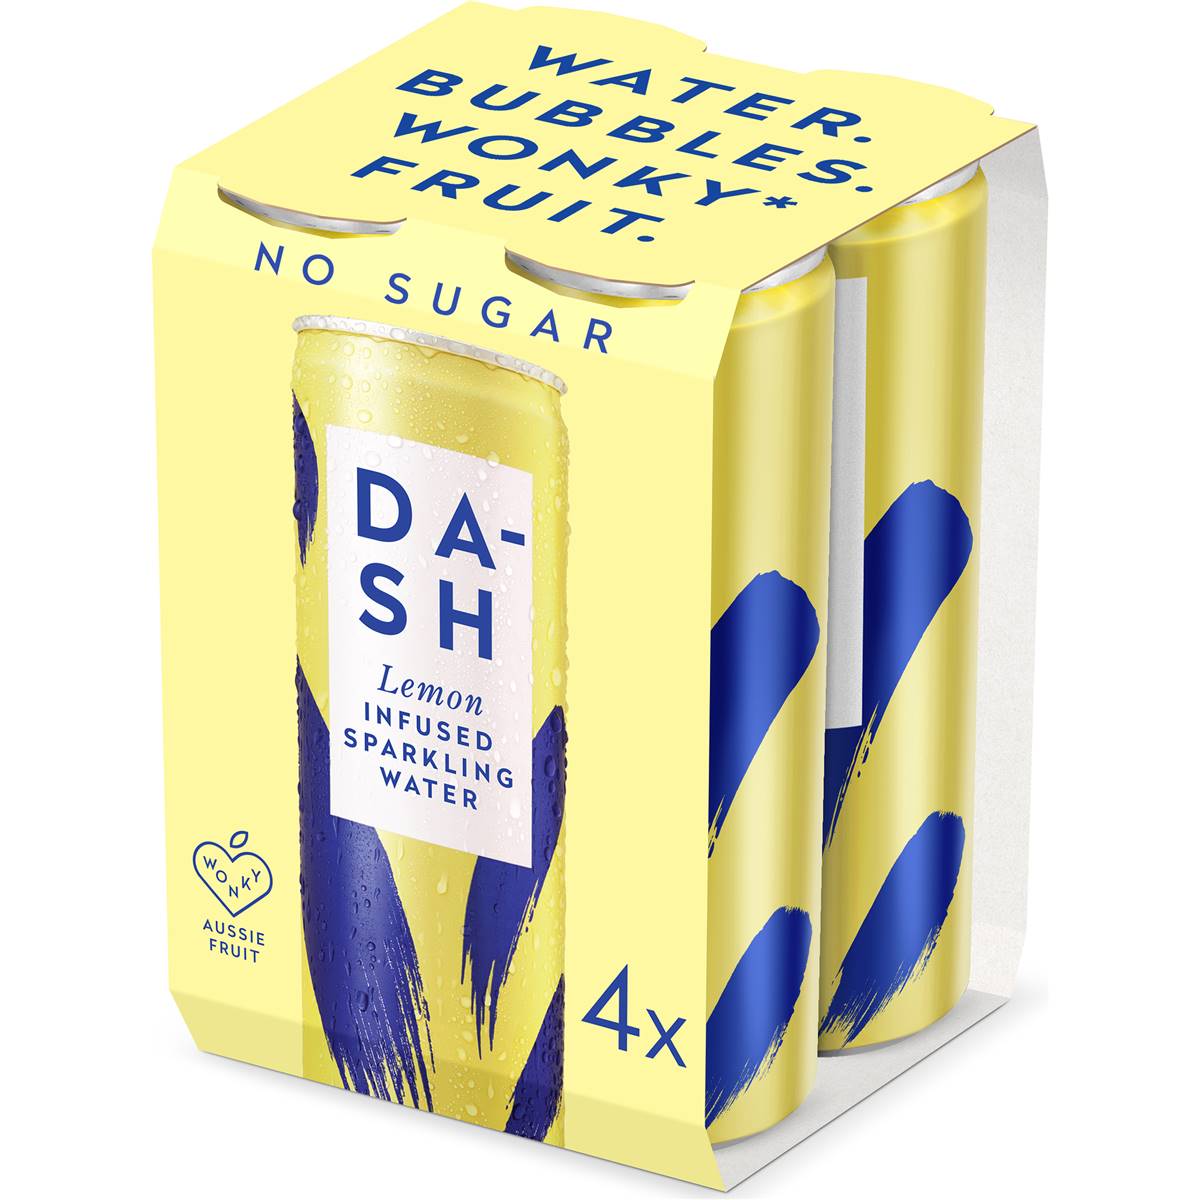 Calories in Dash Water Lemon Infused Sparkling Water